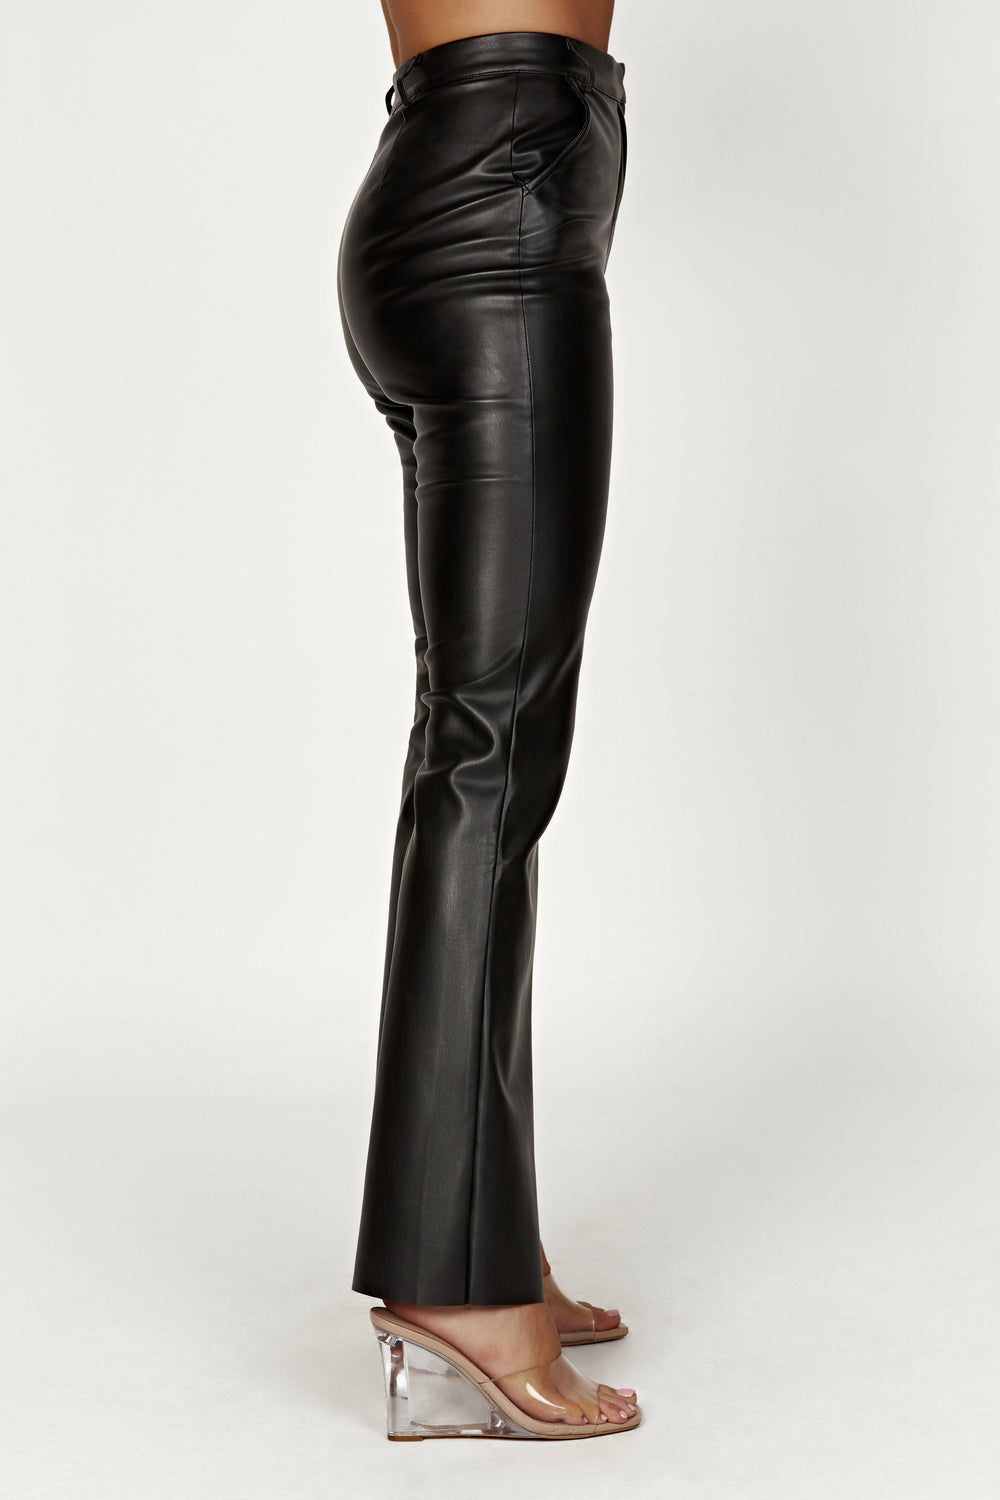 Tyra Straight Leg Faux Leather Pants - Black